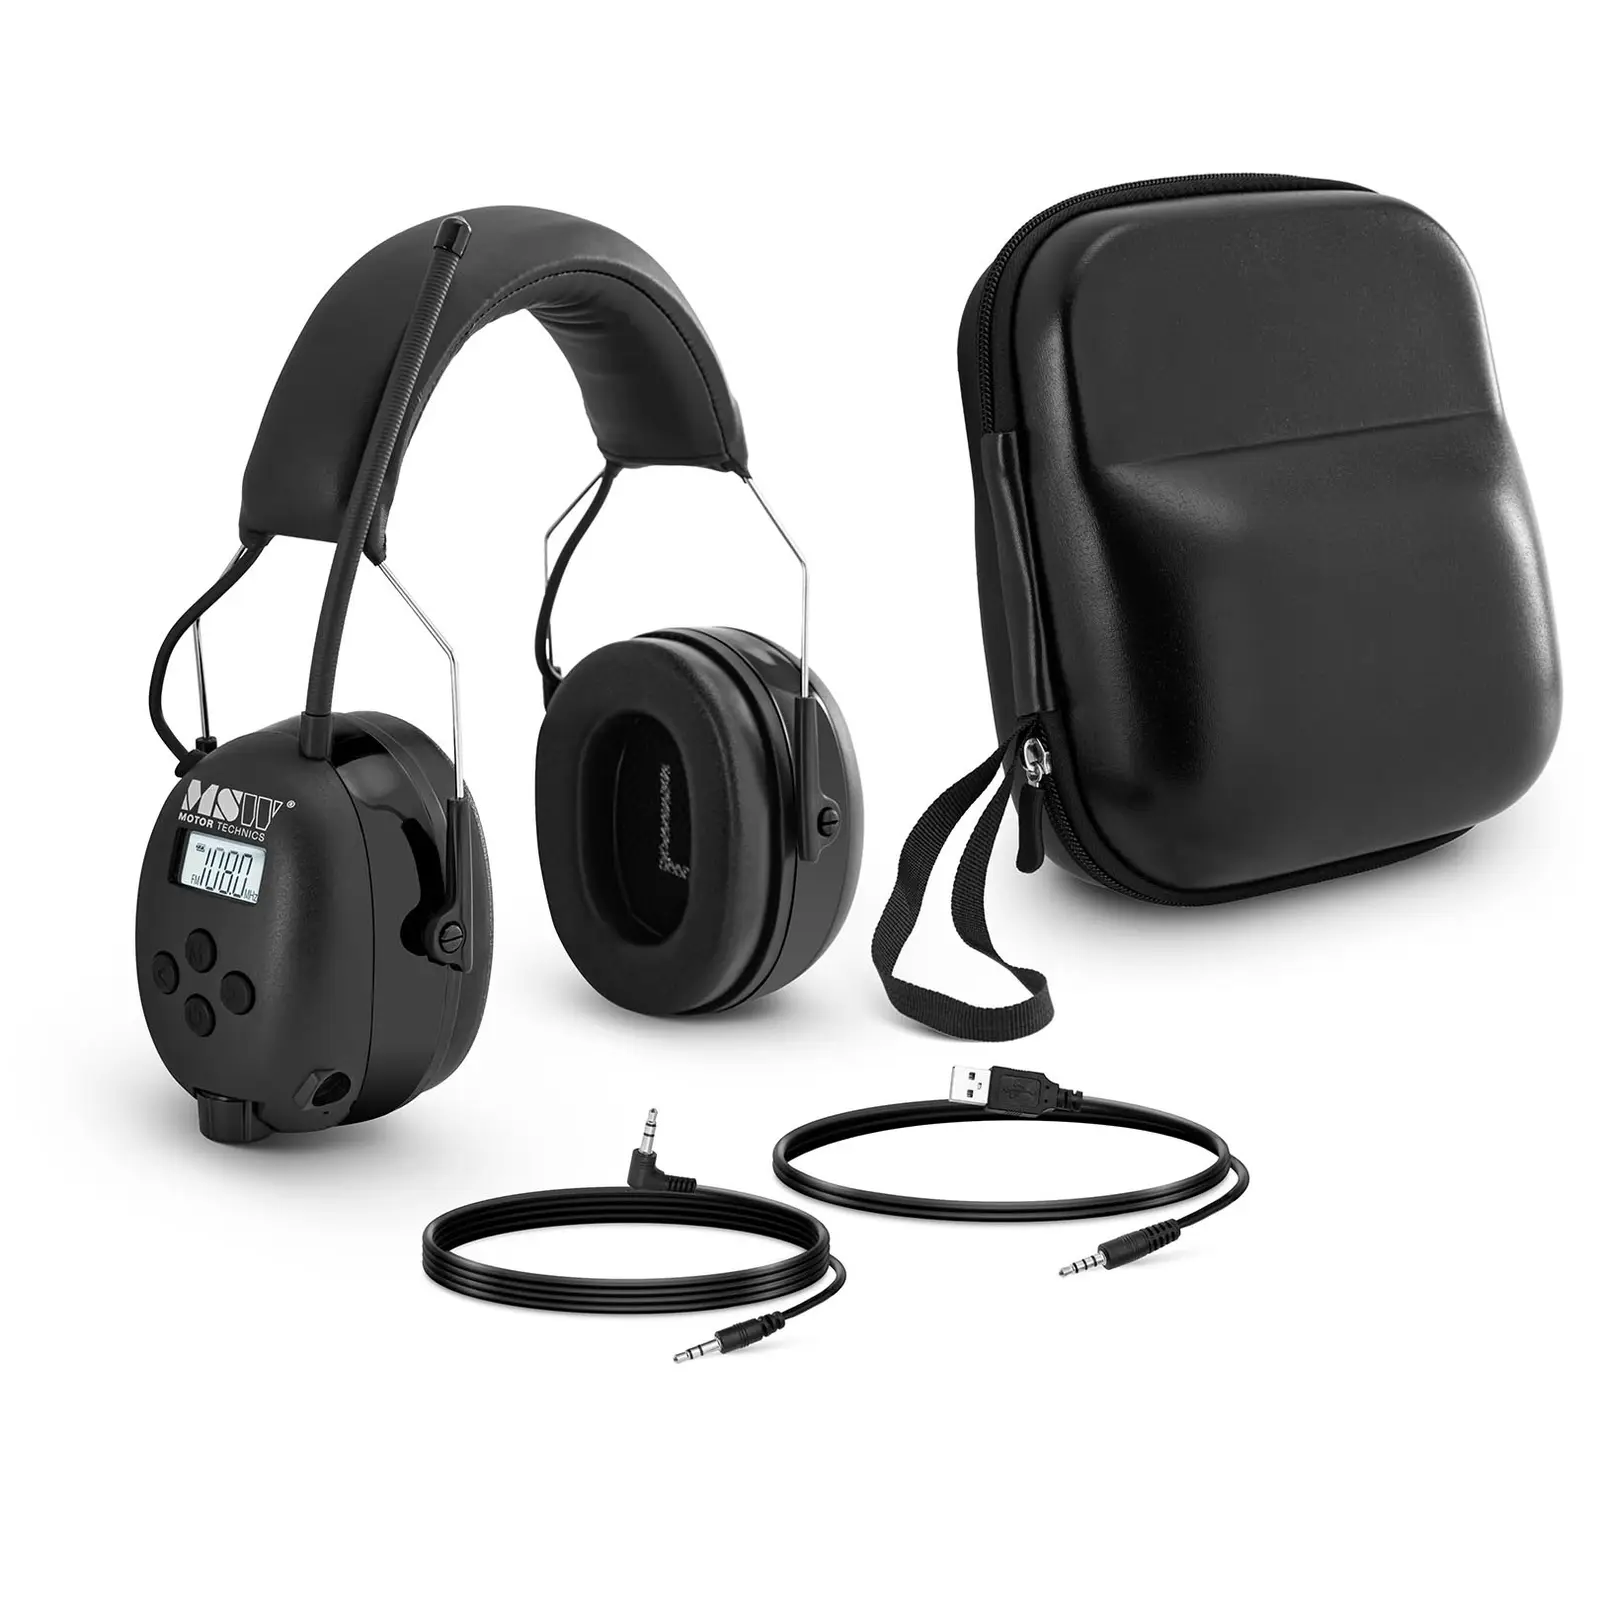 Bluetooth Ακουστικά Ακύρωσης Θορύβου - Μικρόφωνο - Οθόνη LCD - Επαναφορτιζόμενη Μπαταρία - Μαύρο